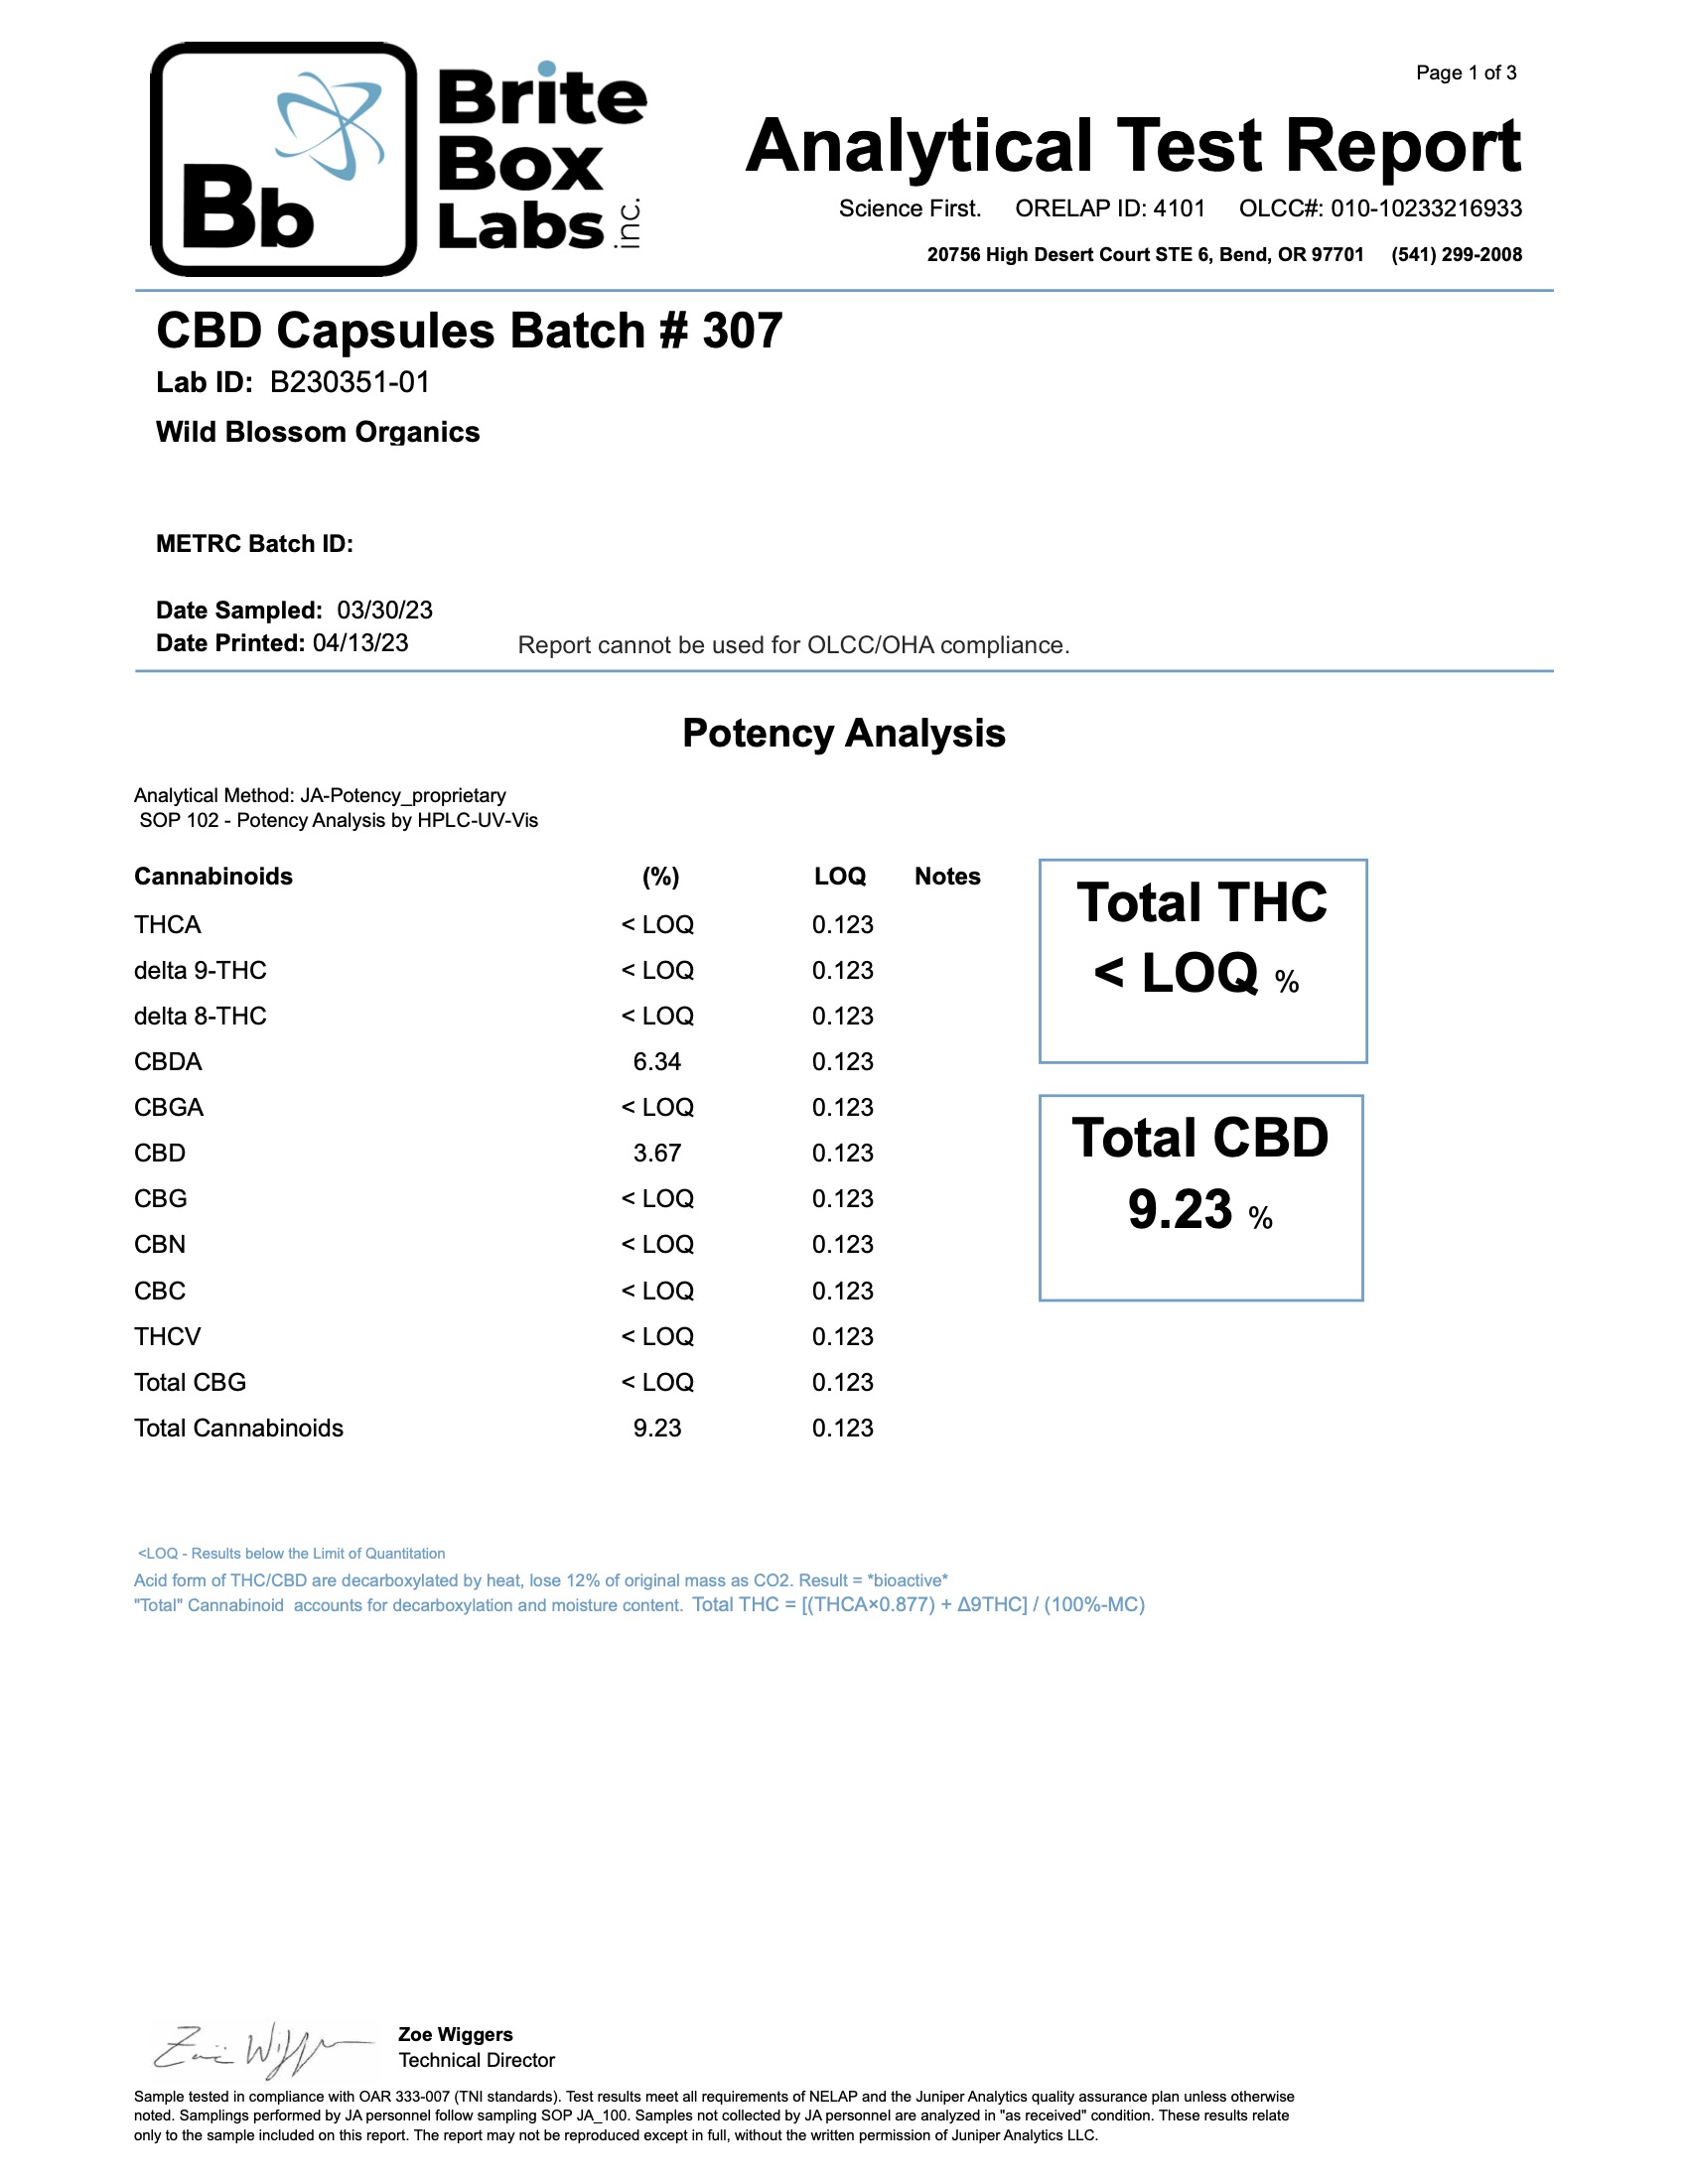 CBD Capsules COA Test Results